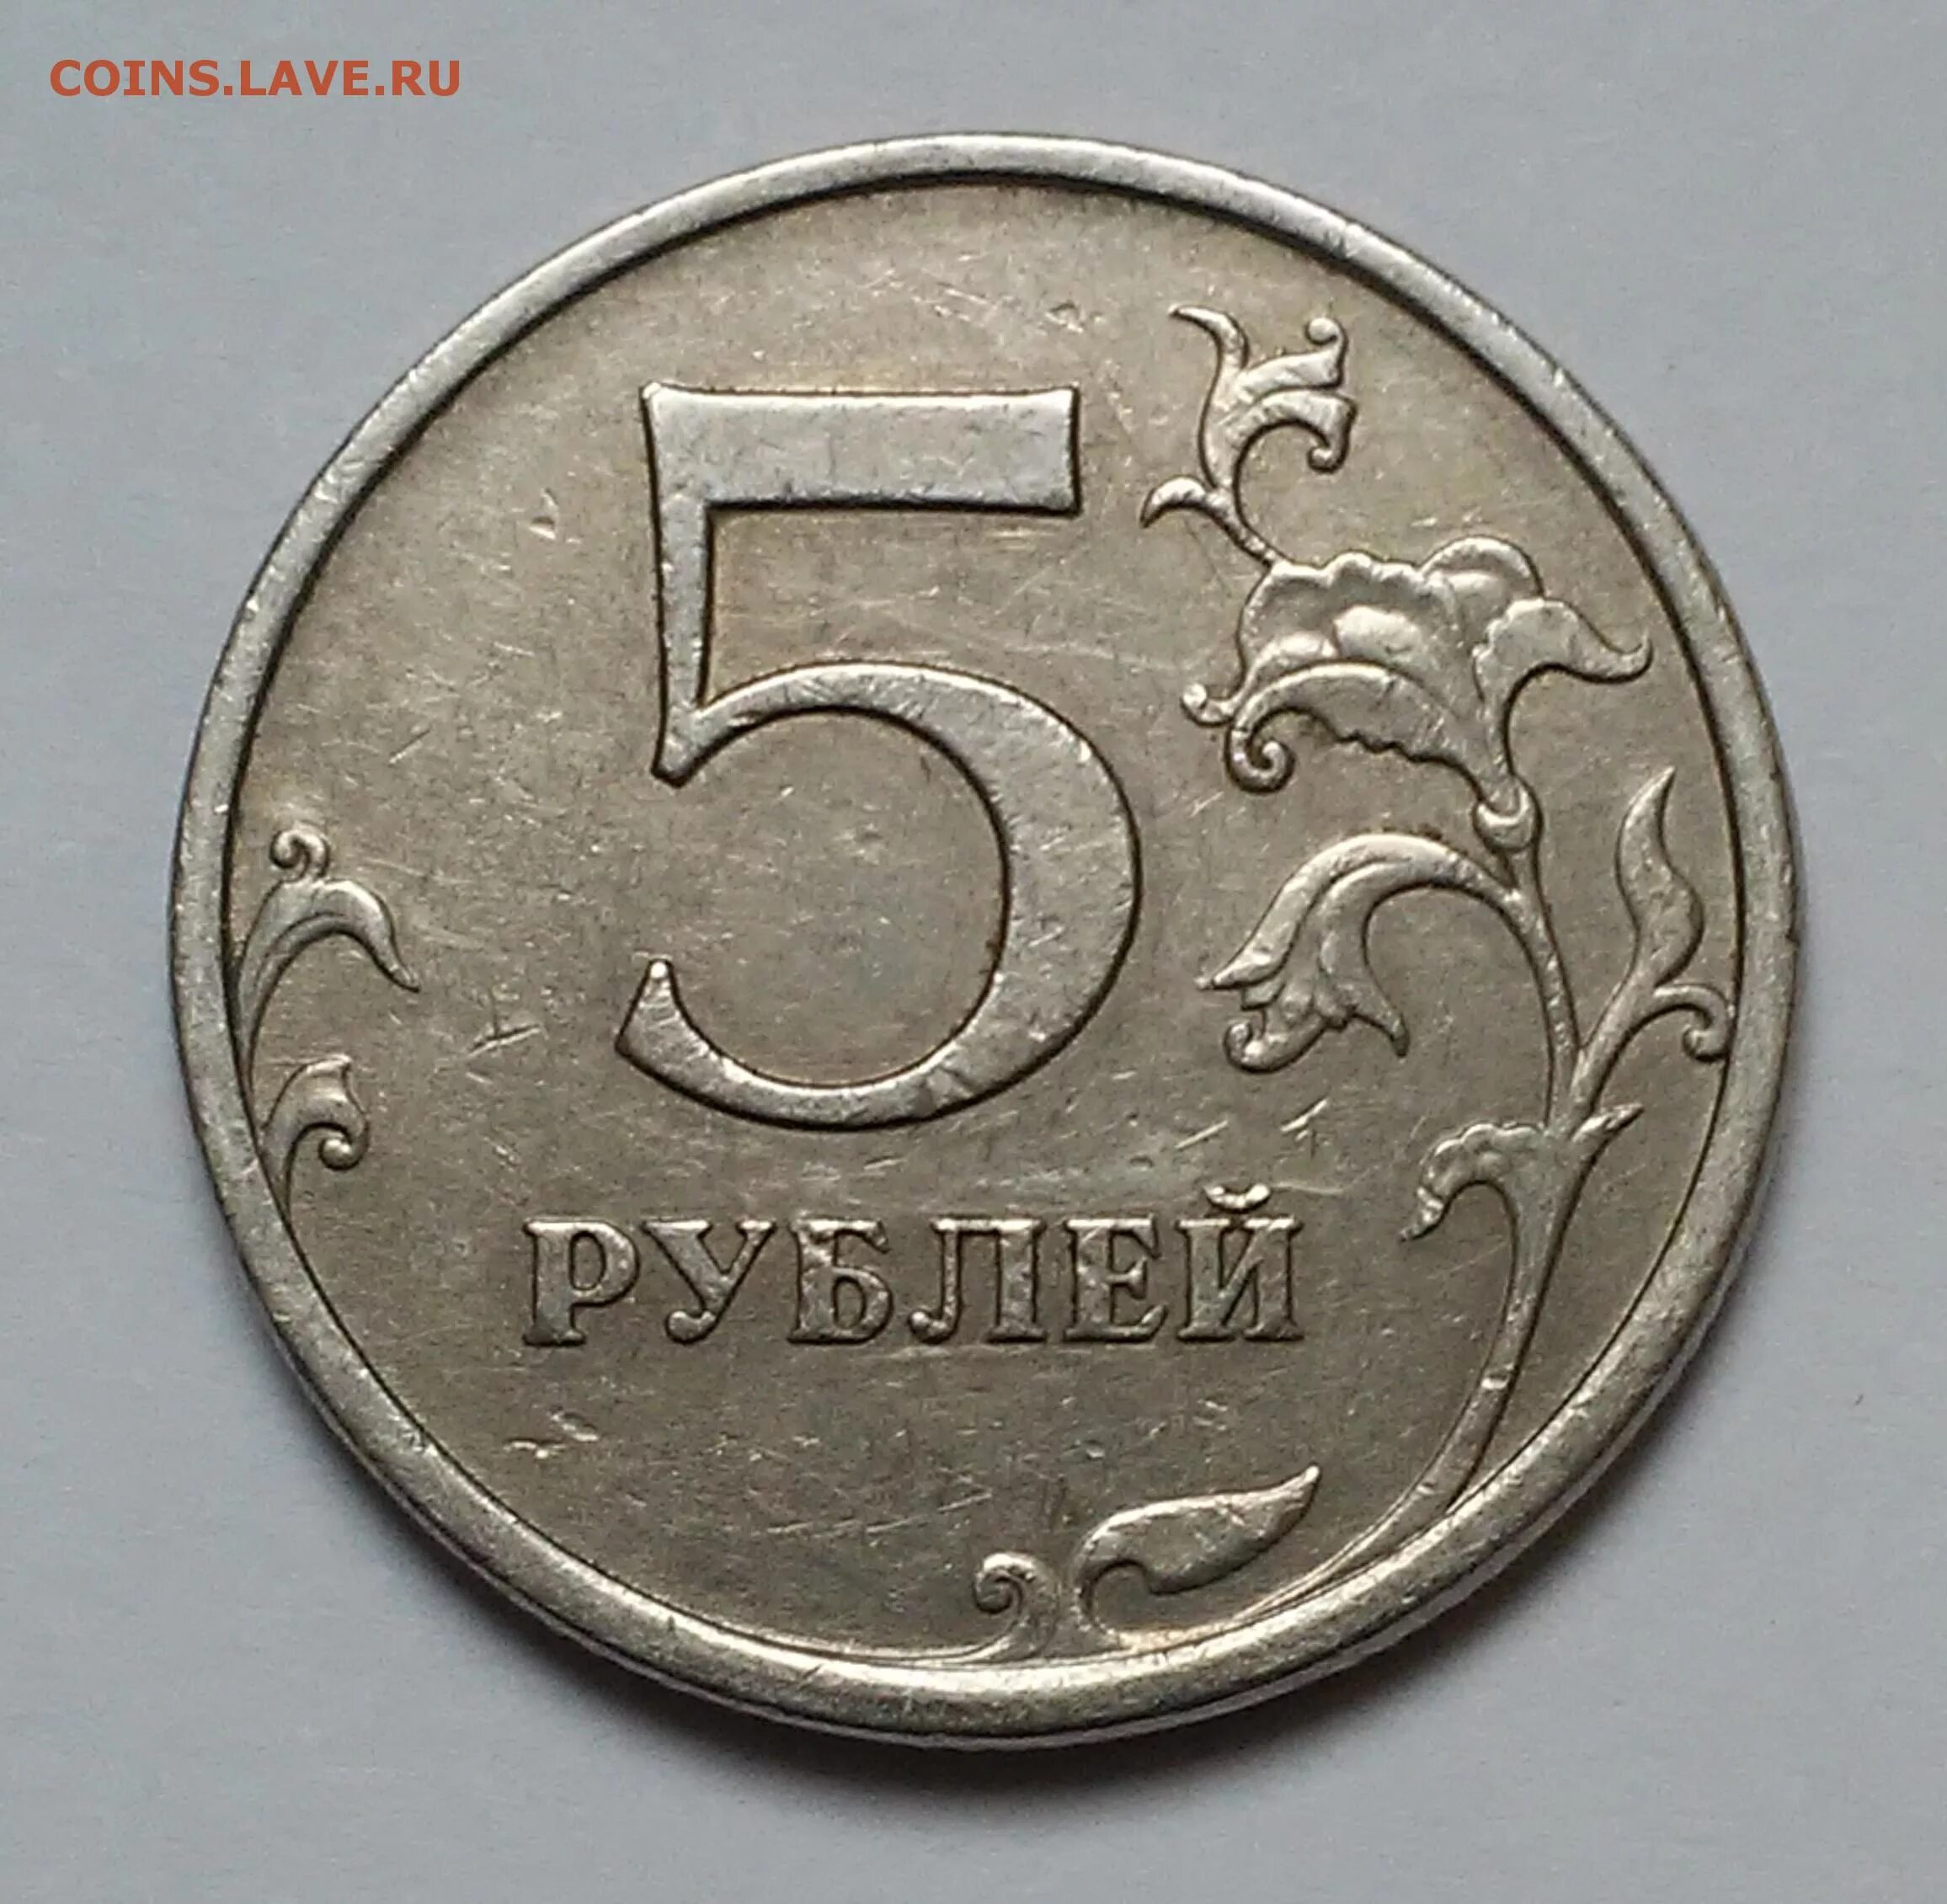 5 рублей 13 года. Монета 5 рублей 2003 года. Есть 5 рублей. Пять и десять рублей 1997 года.